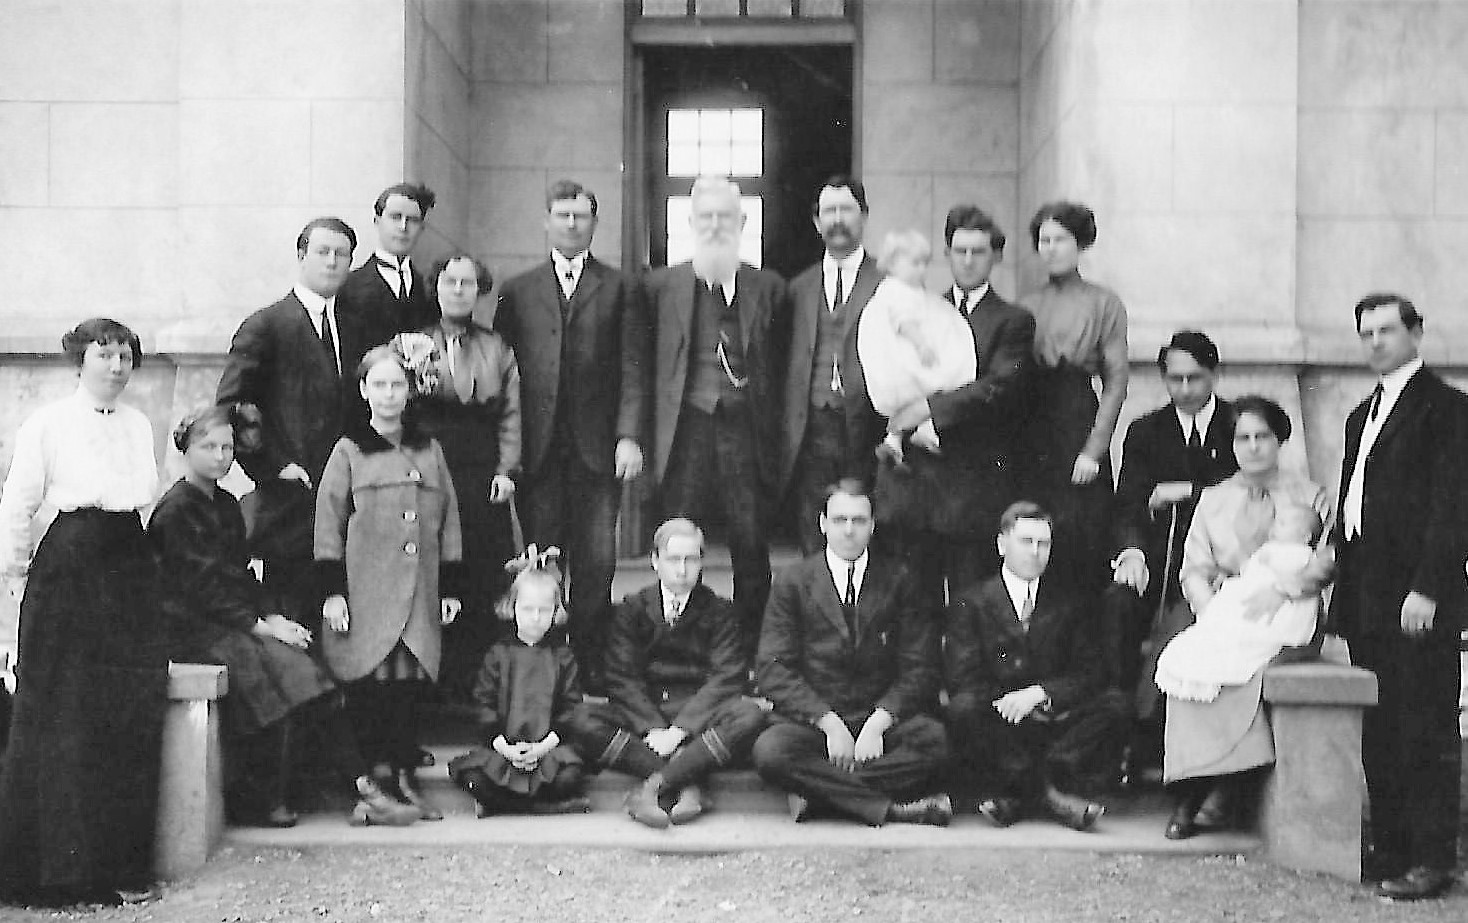 John Johansen Family & Friends in Hastings, New Zealand ca 1912-1915